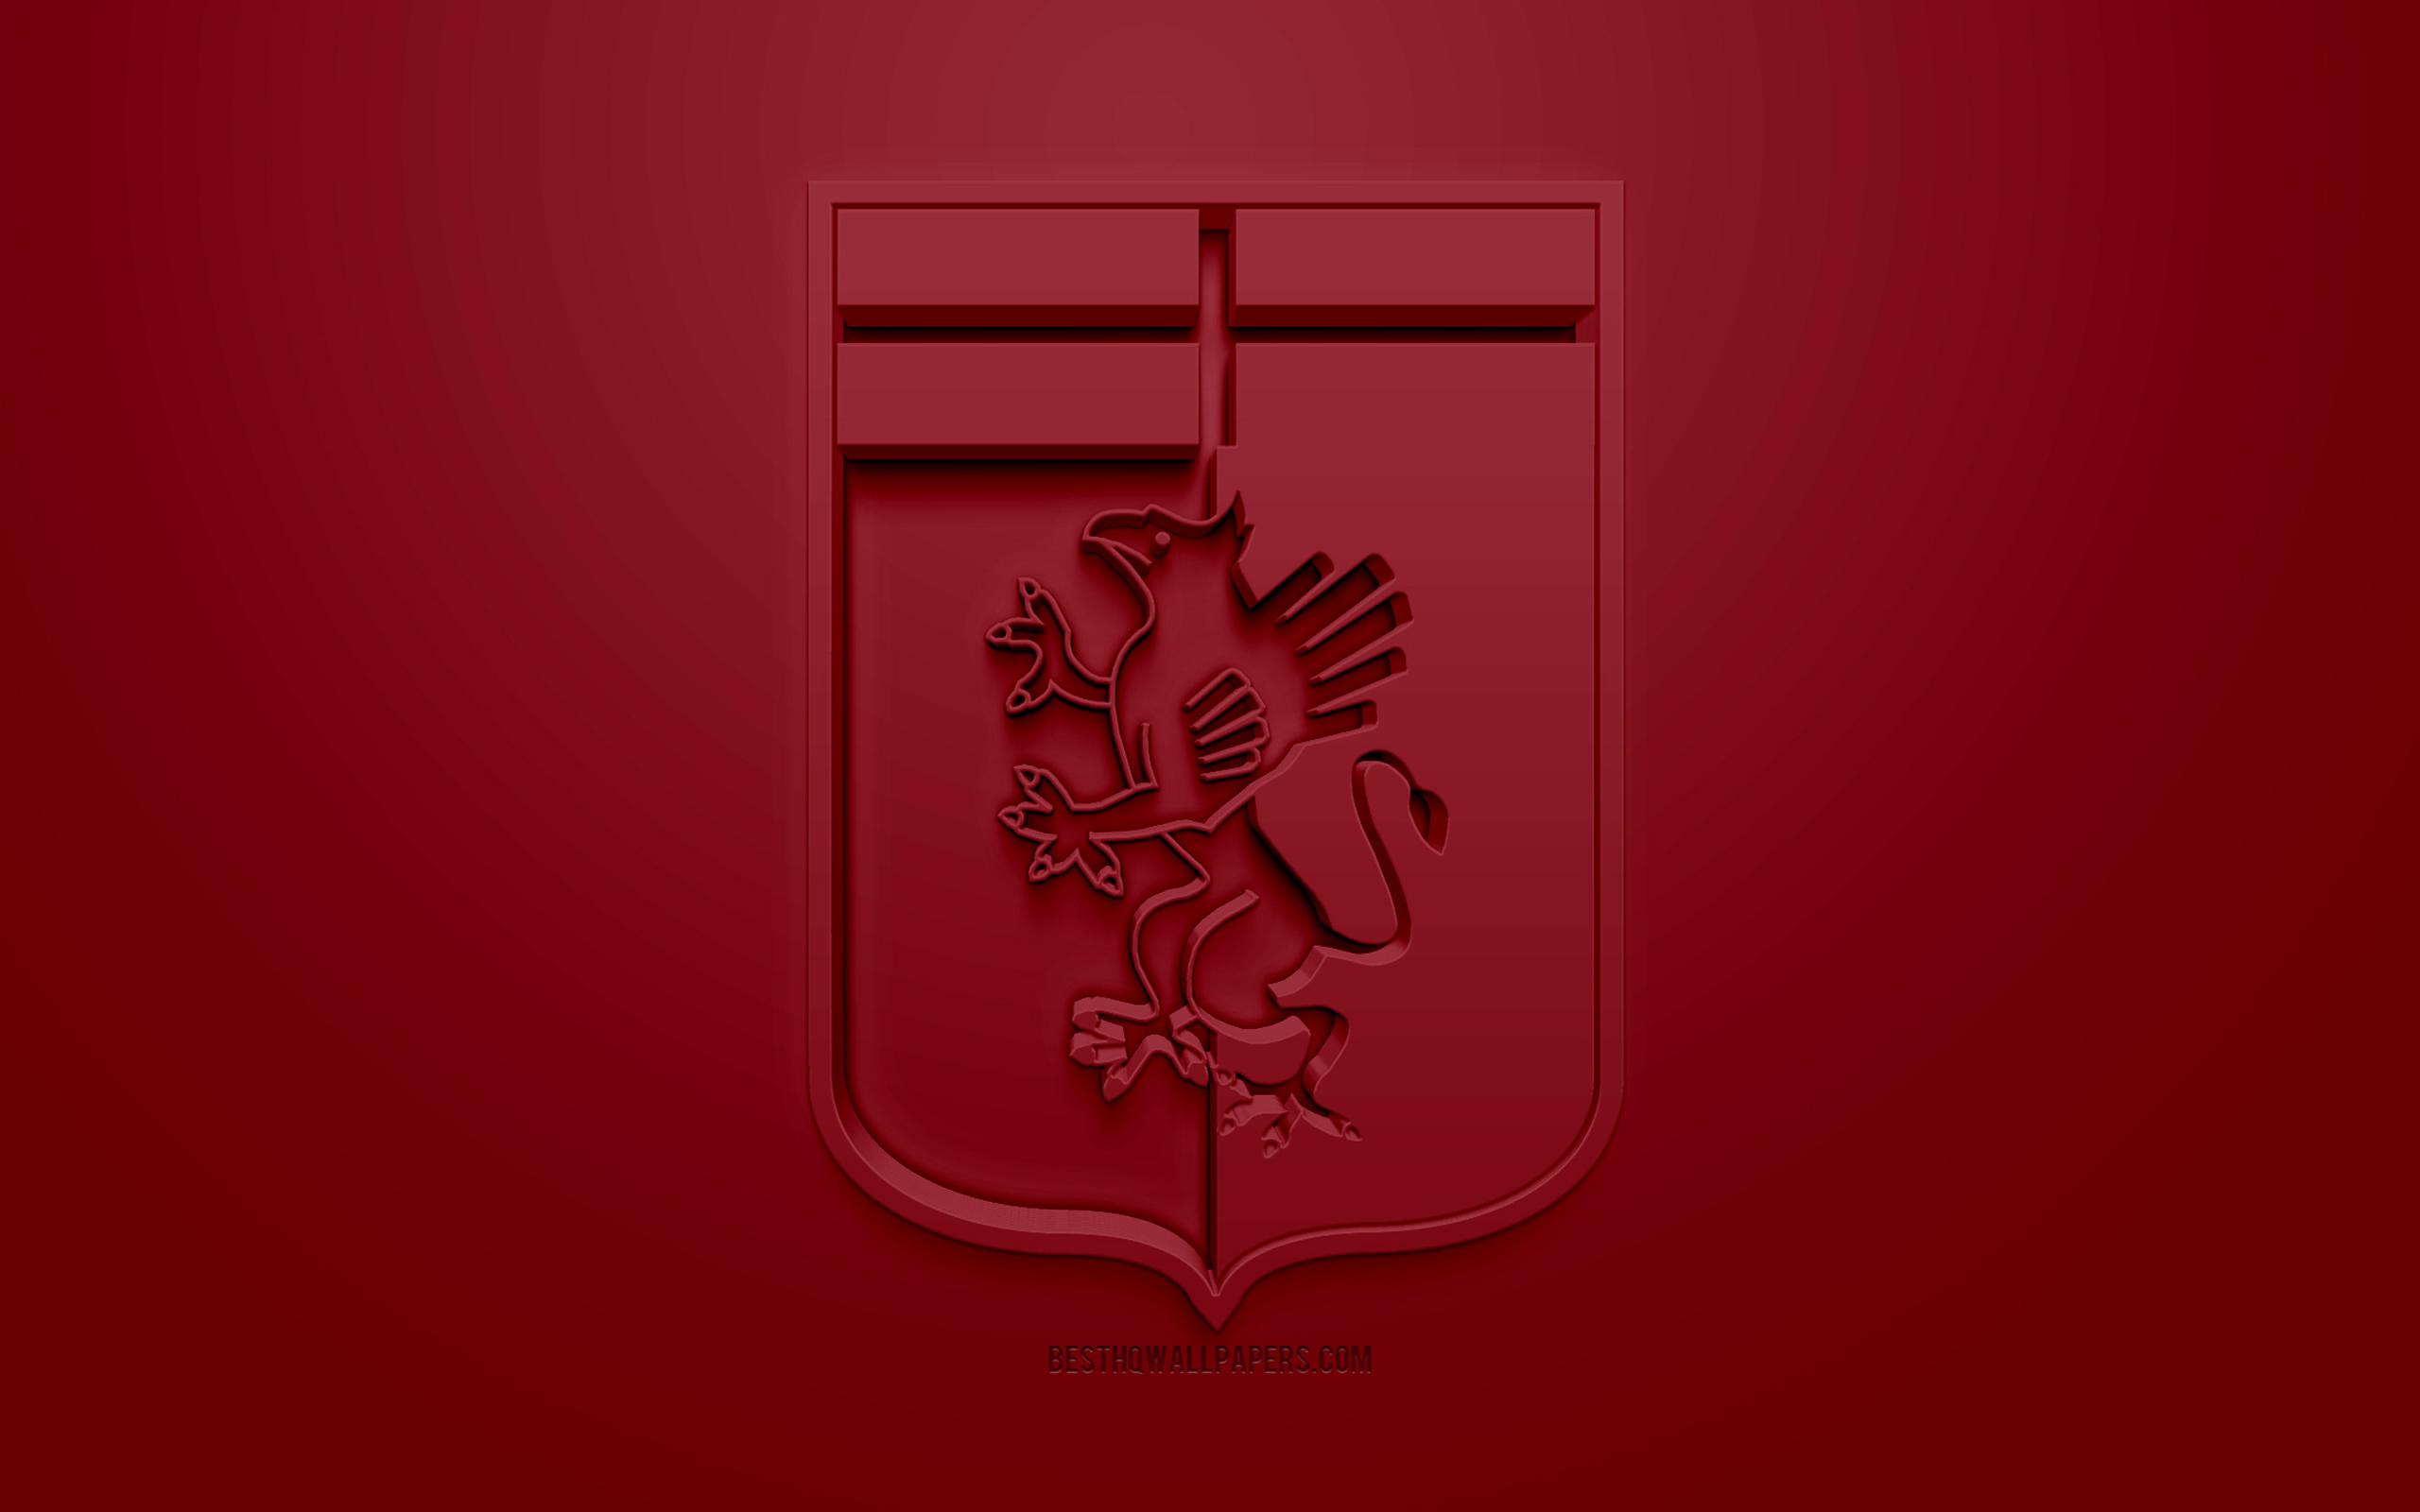 Download wallpaper Genoa CFC, creative 3D logo, burgundy background